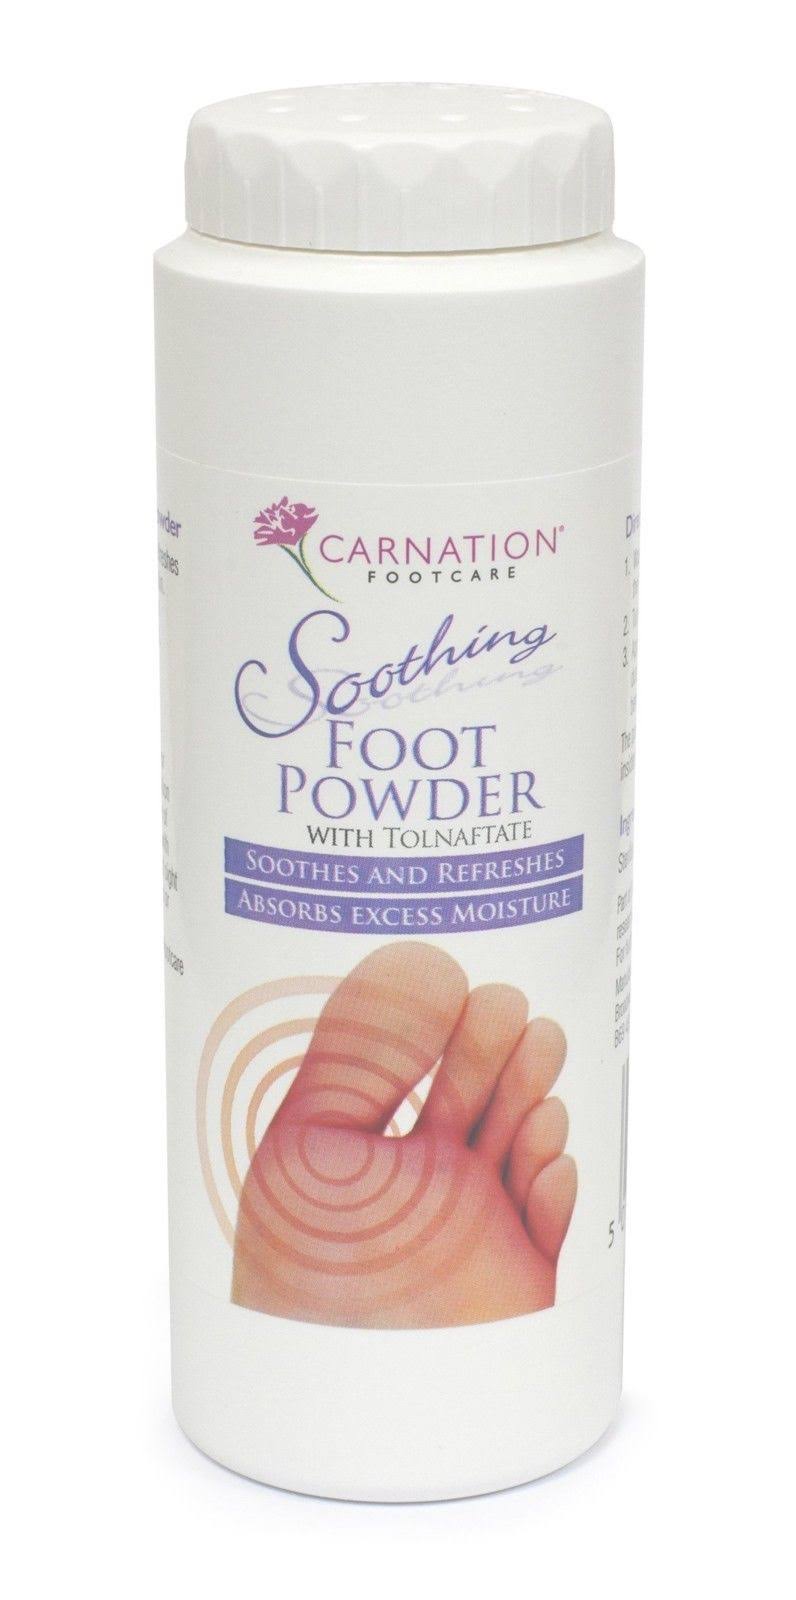 Carnation Soothing Foot Powder